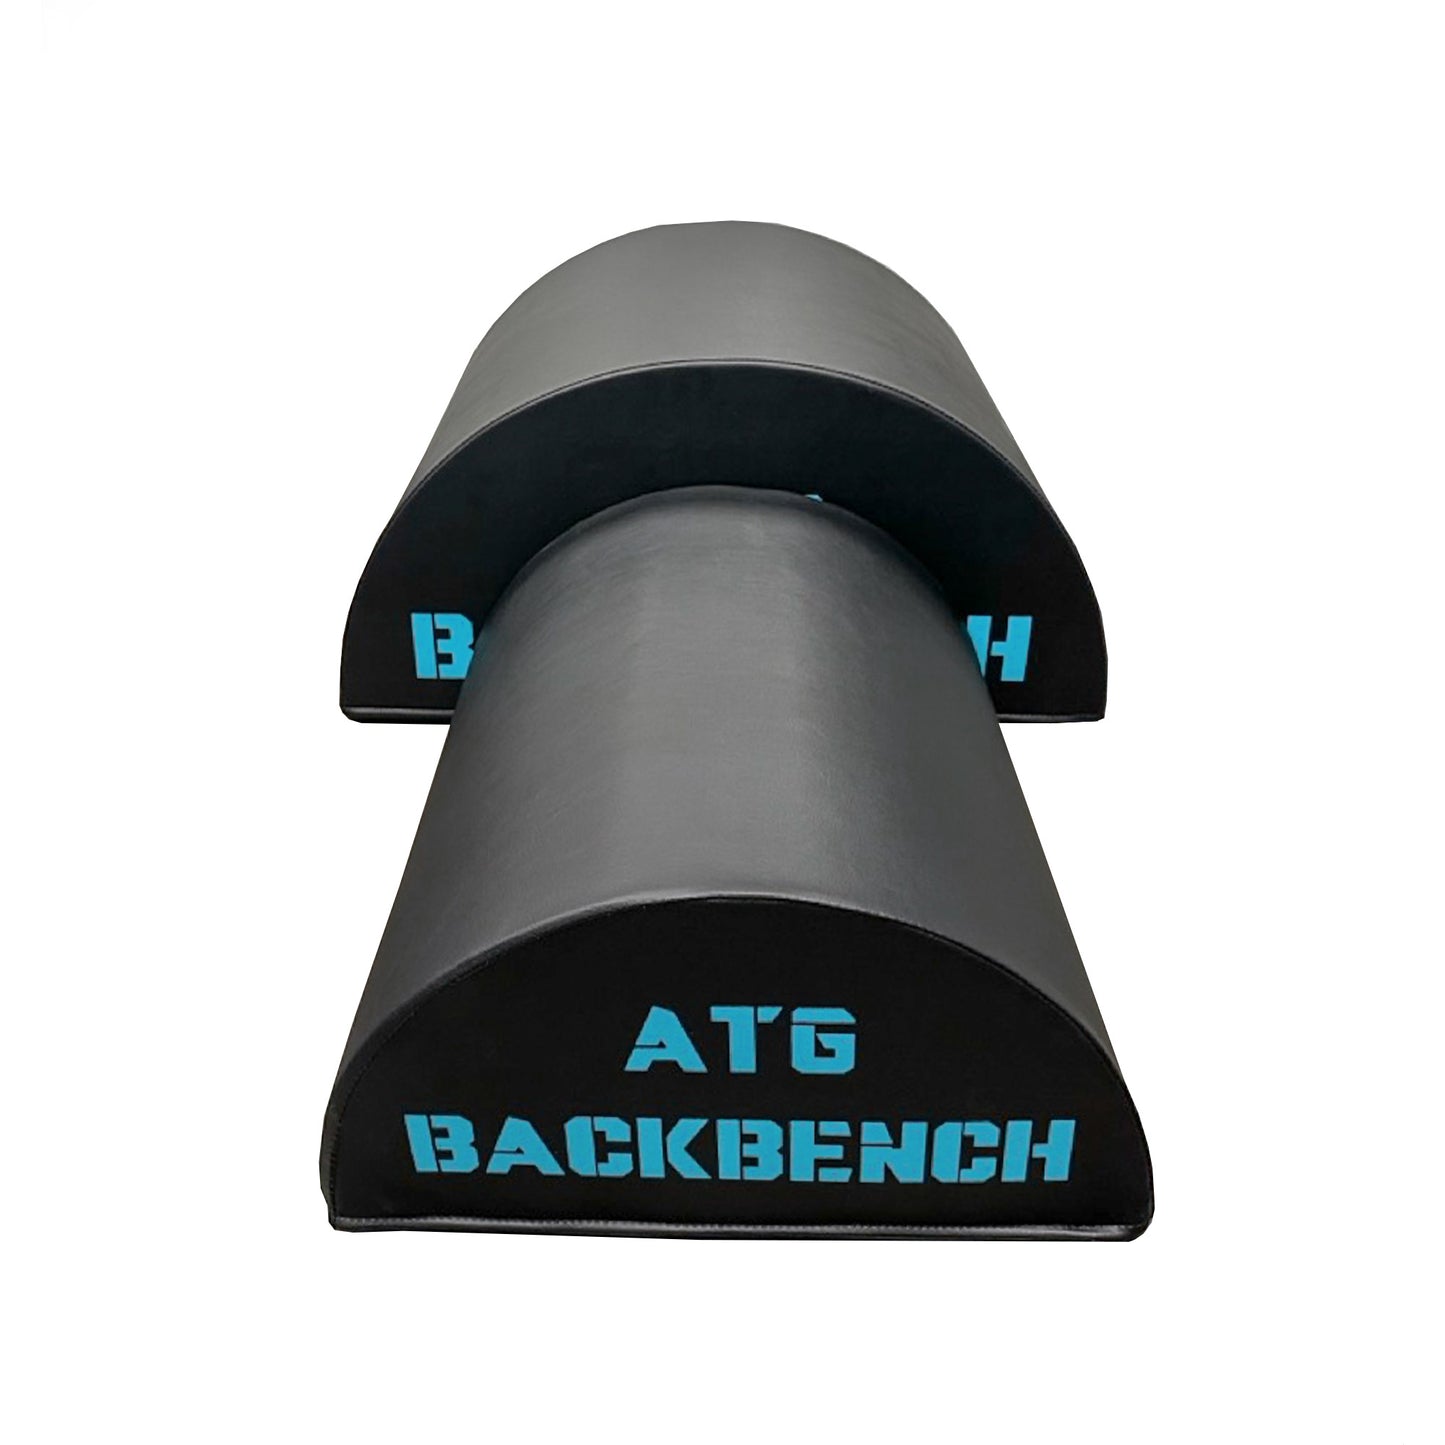 The BackBench